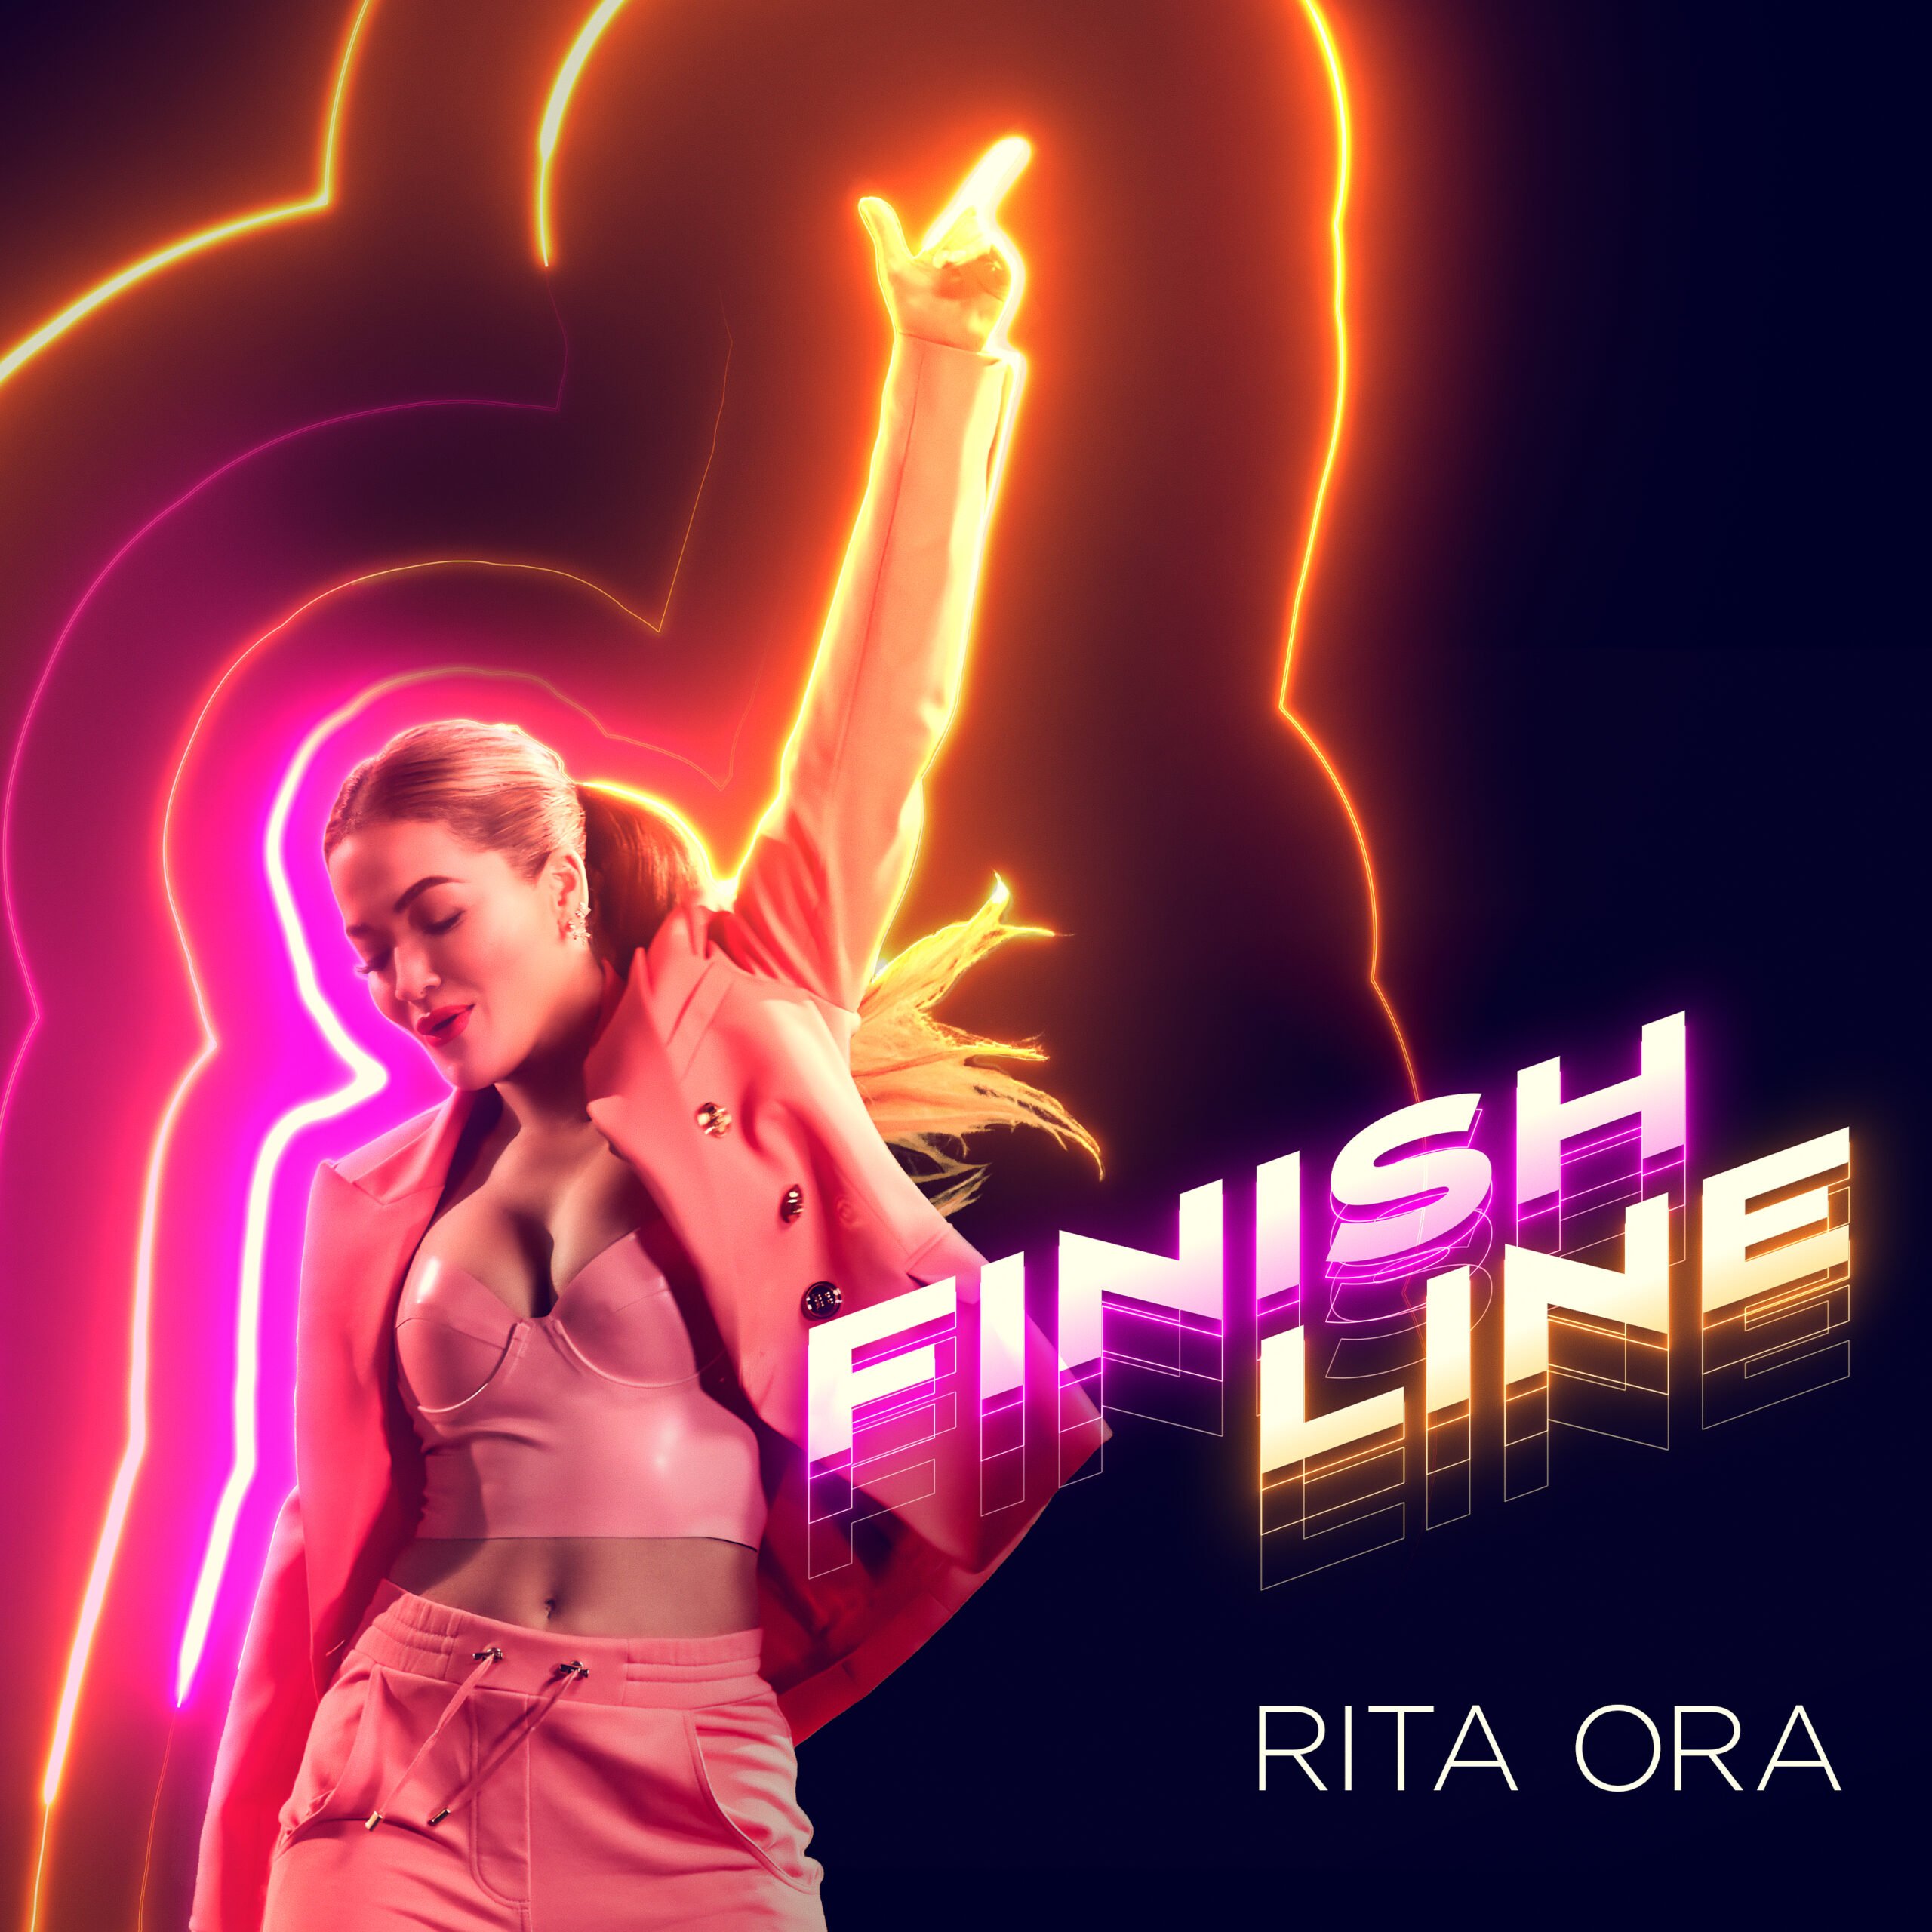 Rita Ora Finish Line via Heather Davis for Disney for use by 360 Magazine